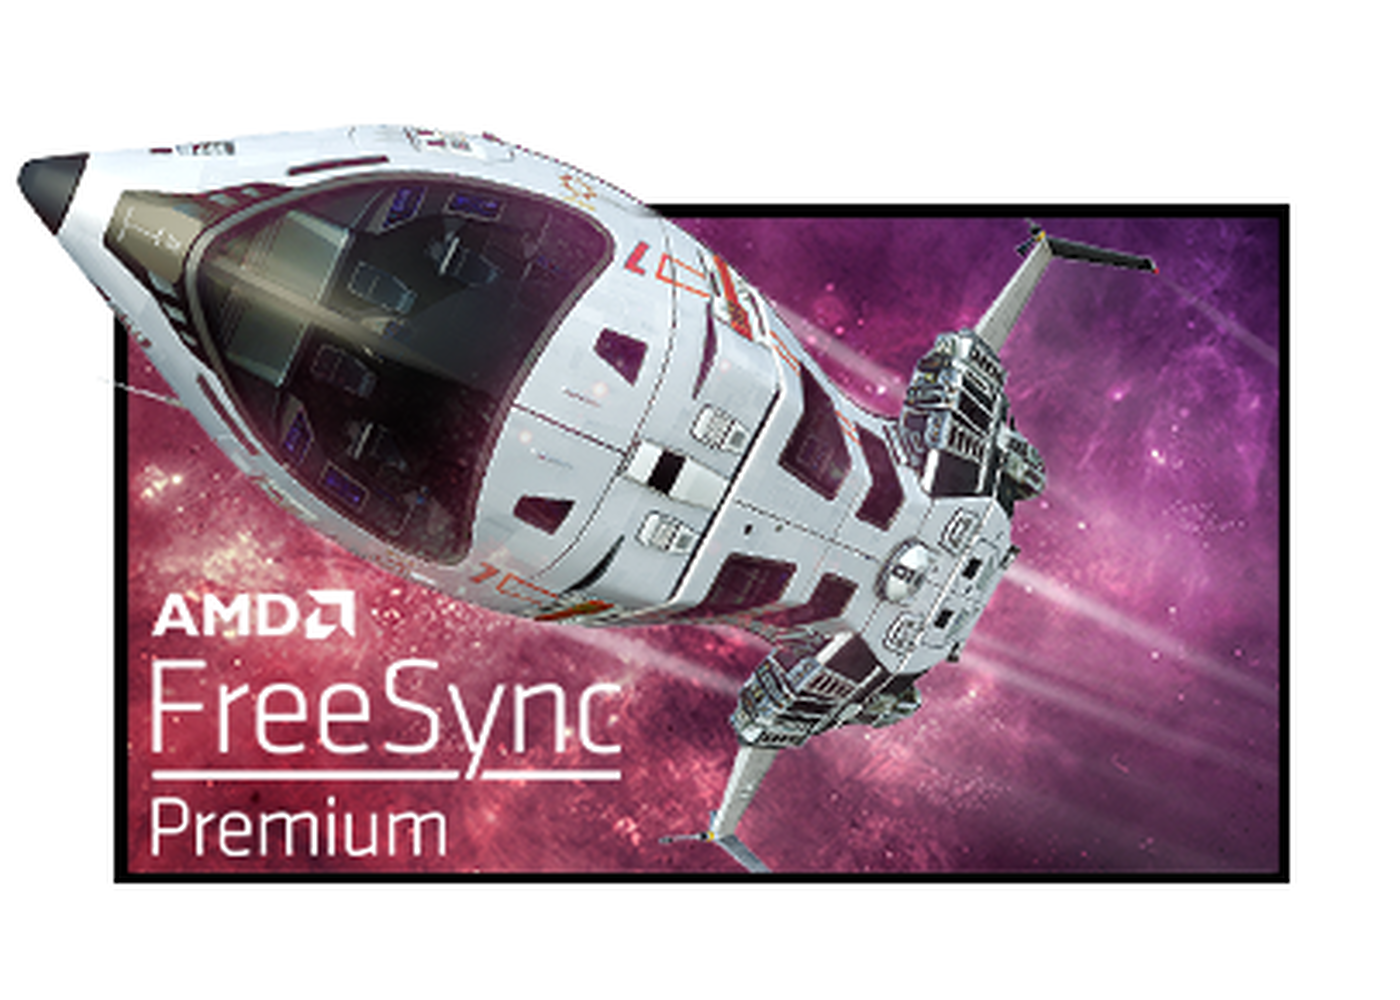 FreeSync™ Premium Technology